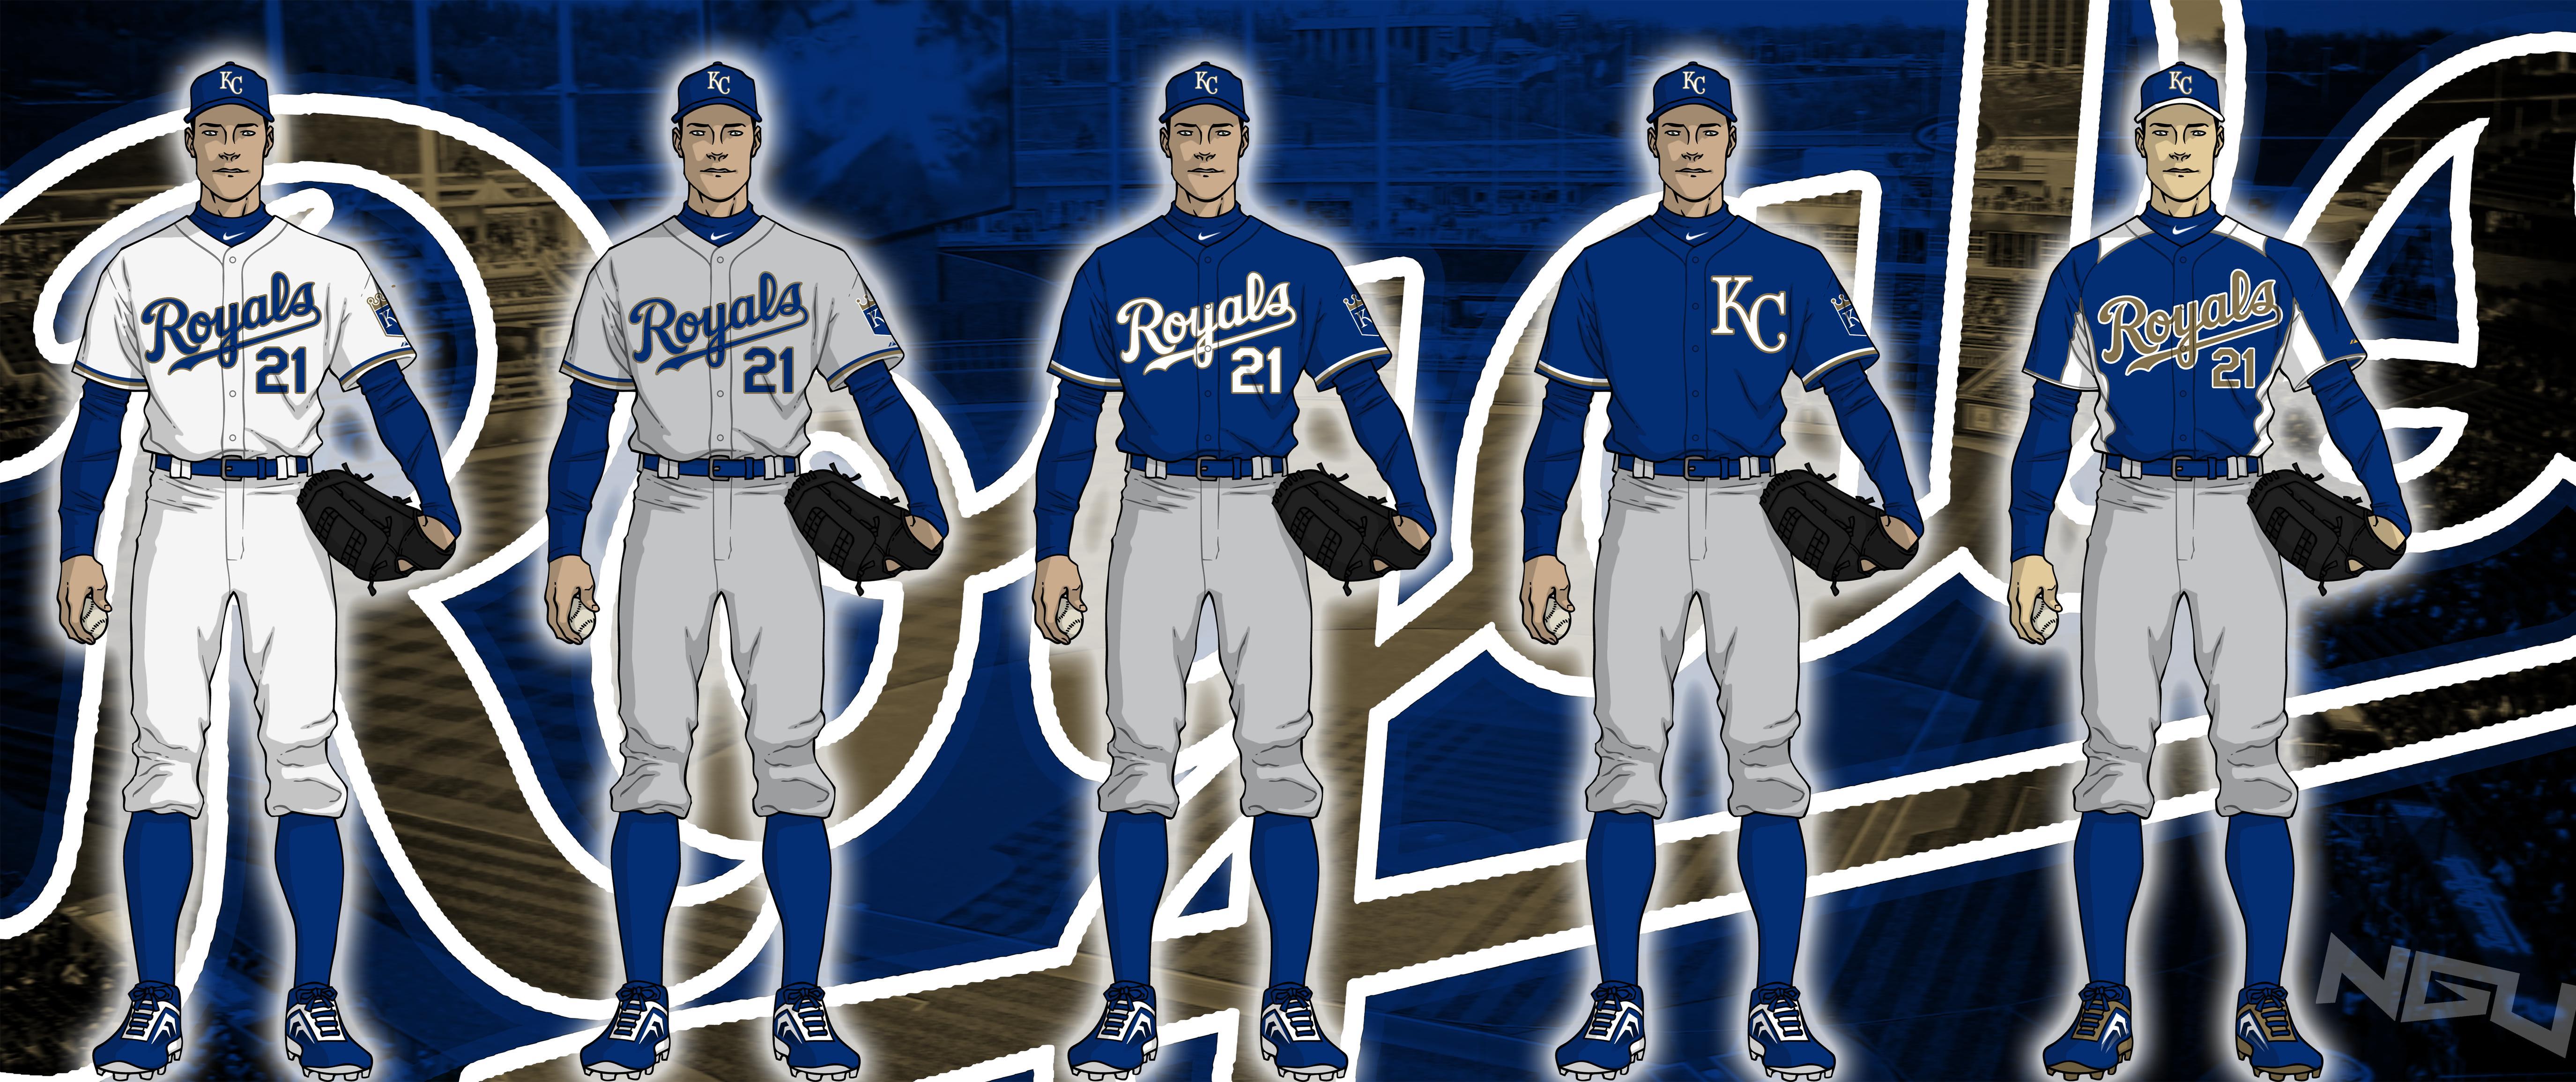 Royals Baseball Logo - Kansas City Royals Concept Uniforms - Concepts - Chris Creamer's ...